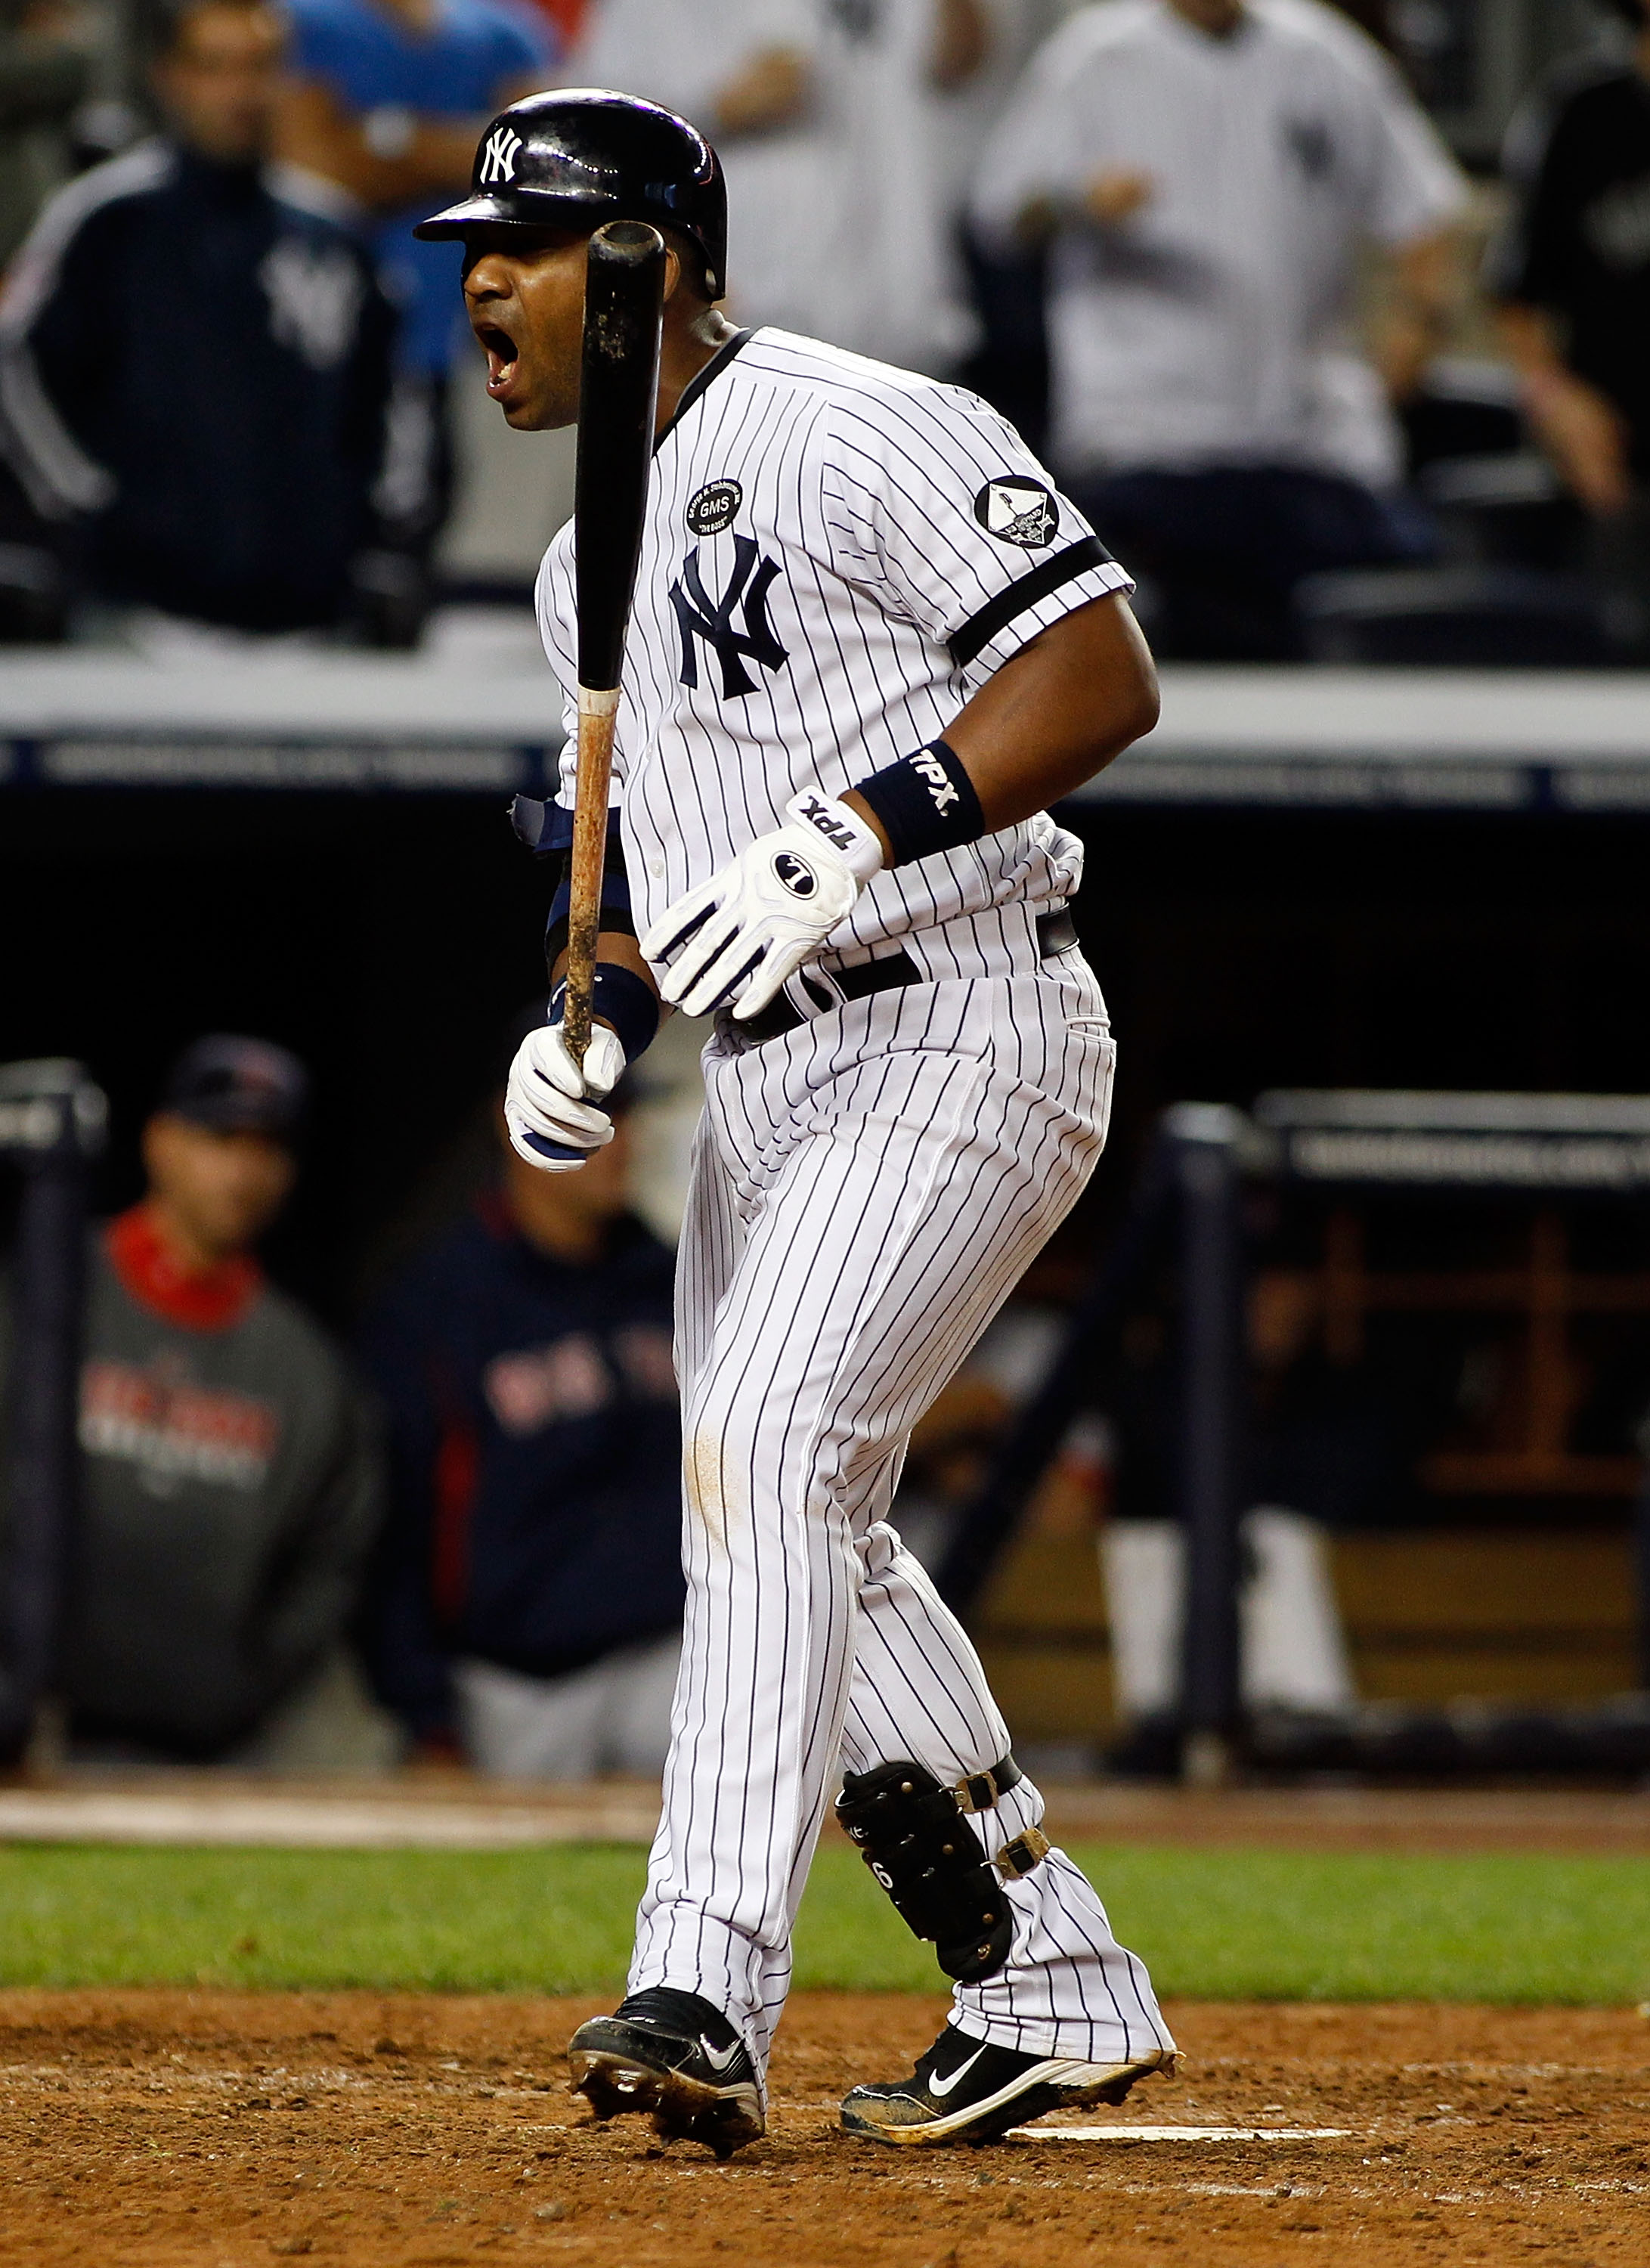 This is a 2009 photo of Juan Miranda of the New York Yankees